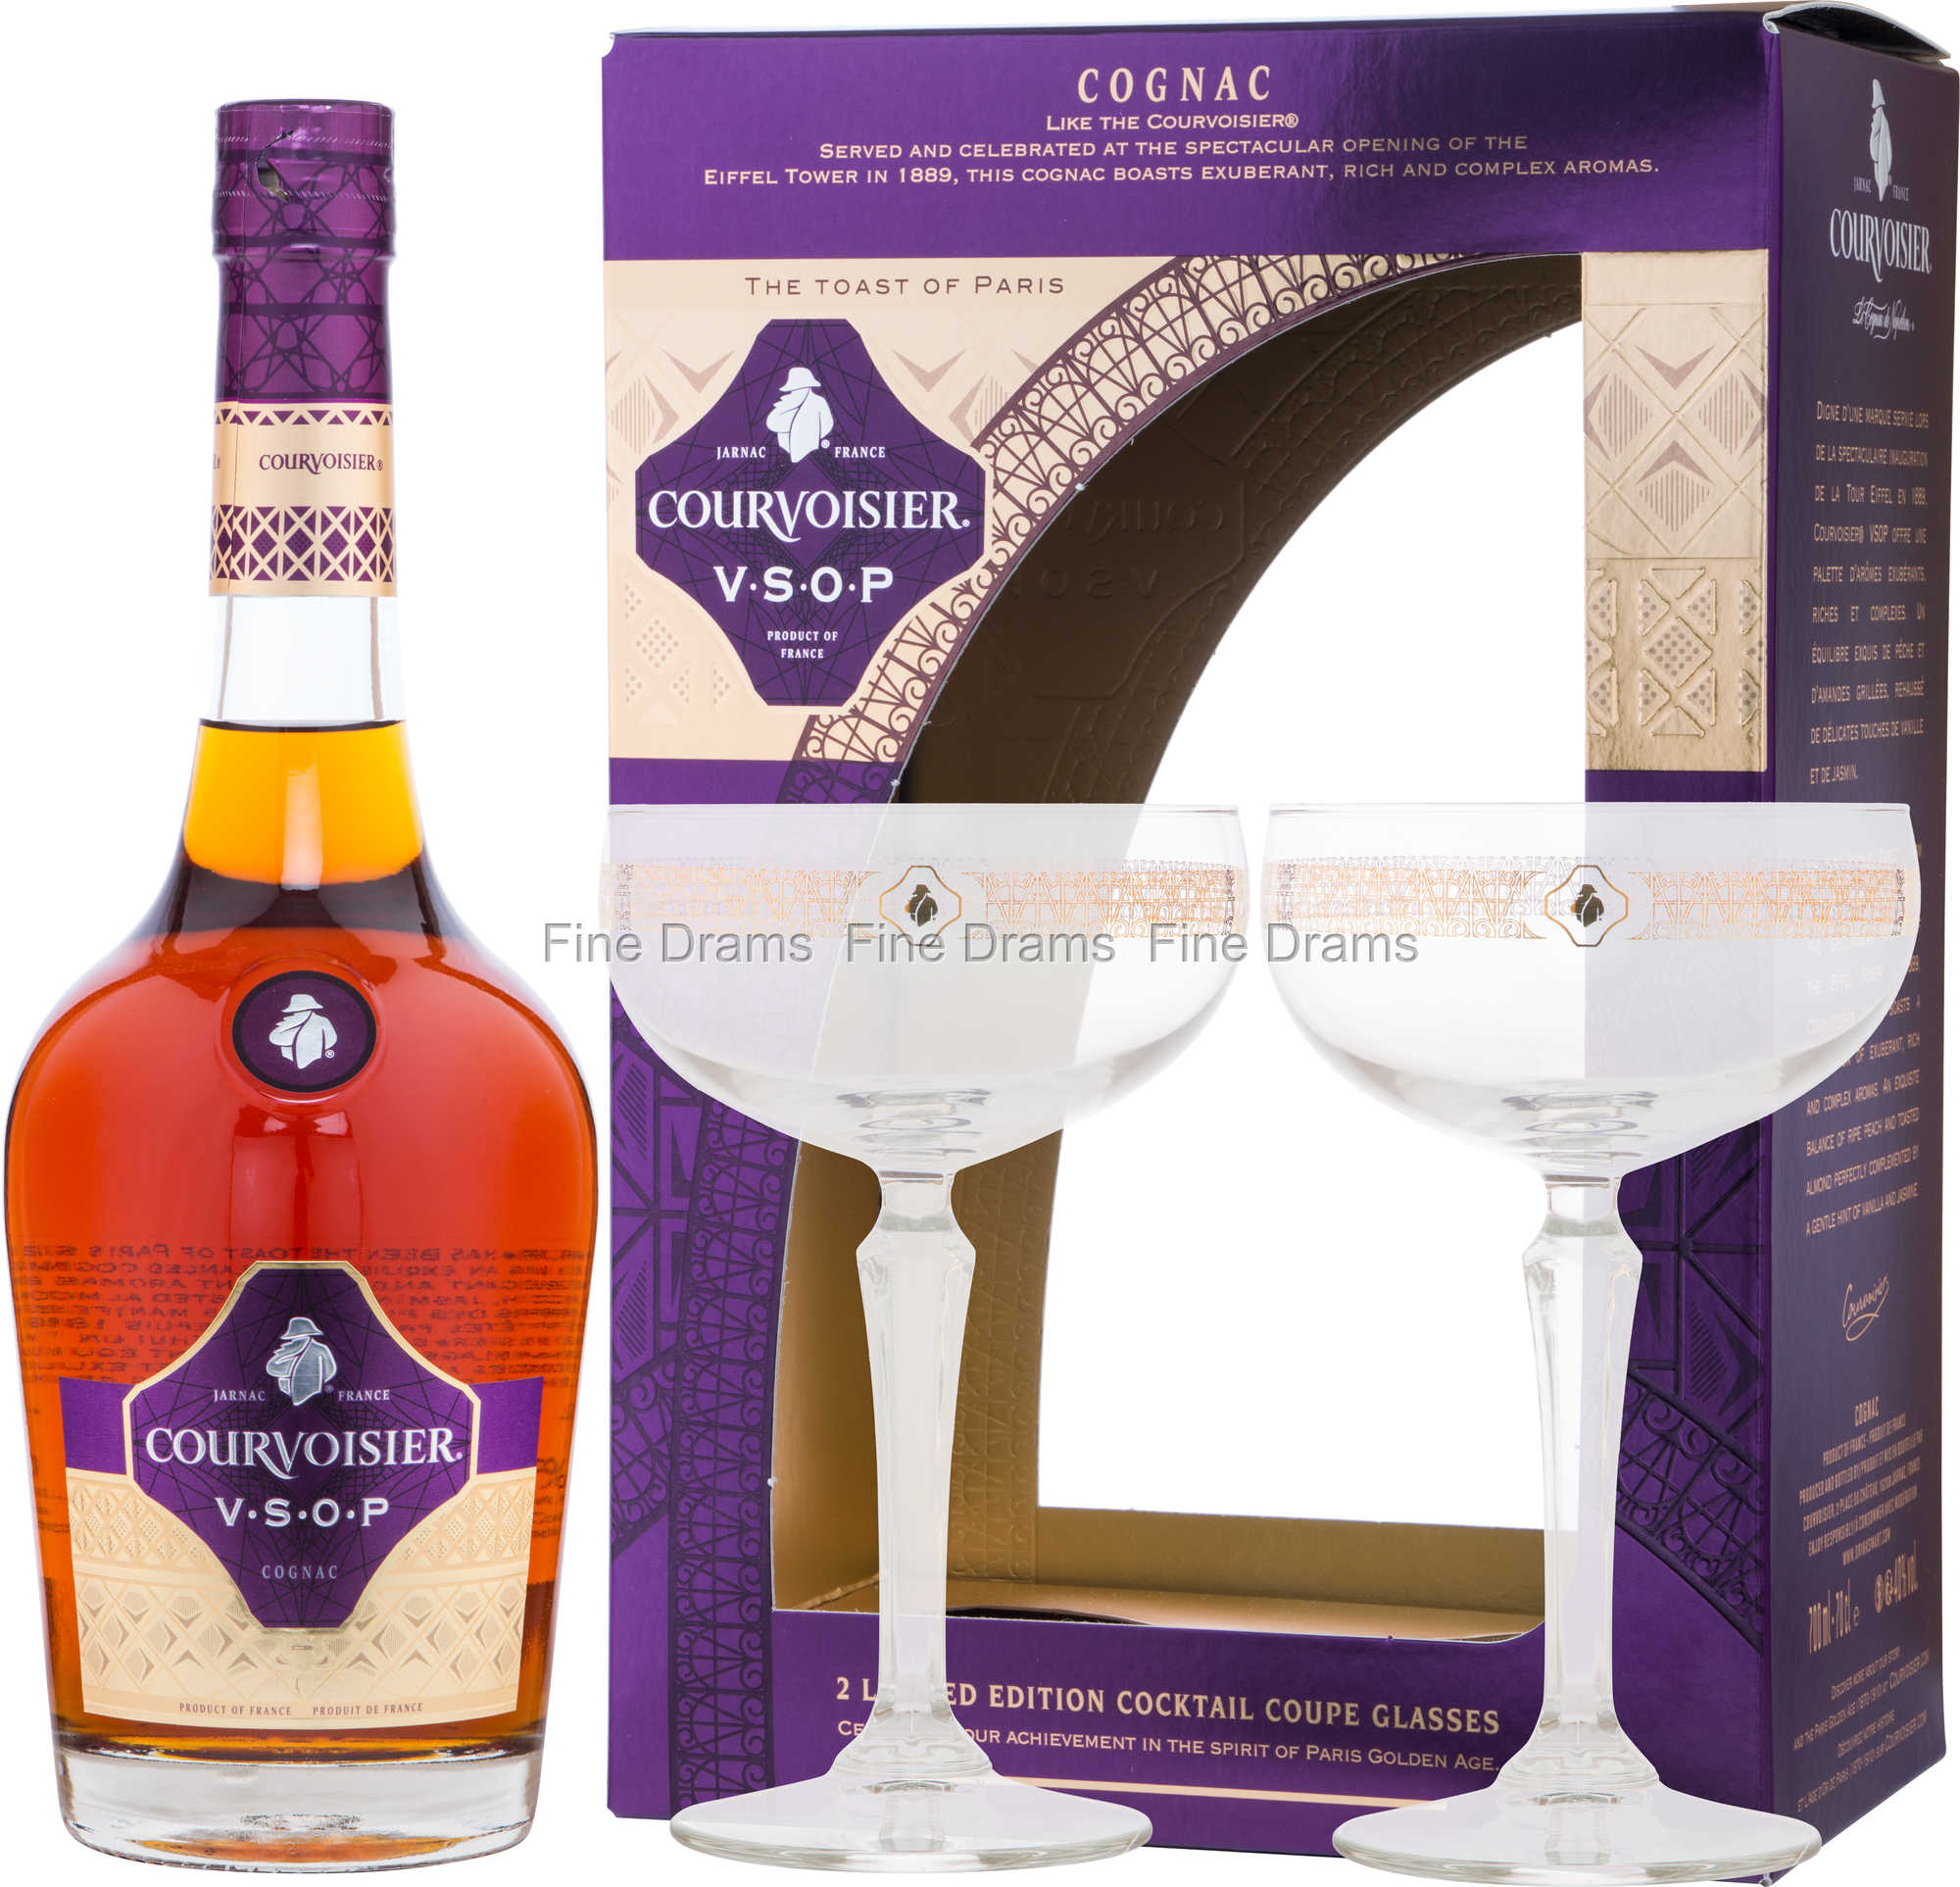 Courvoisier VSOP Cognac Gift Pack - 2 Cocktail Coupe Glasses